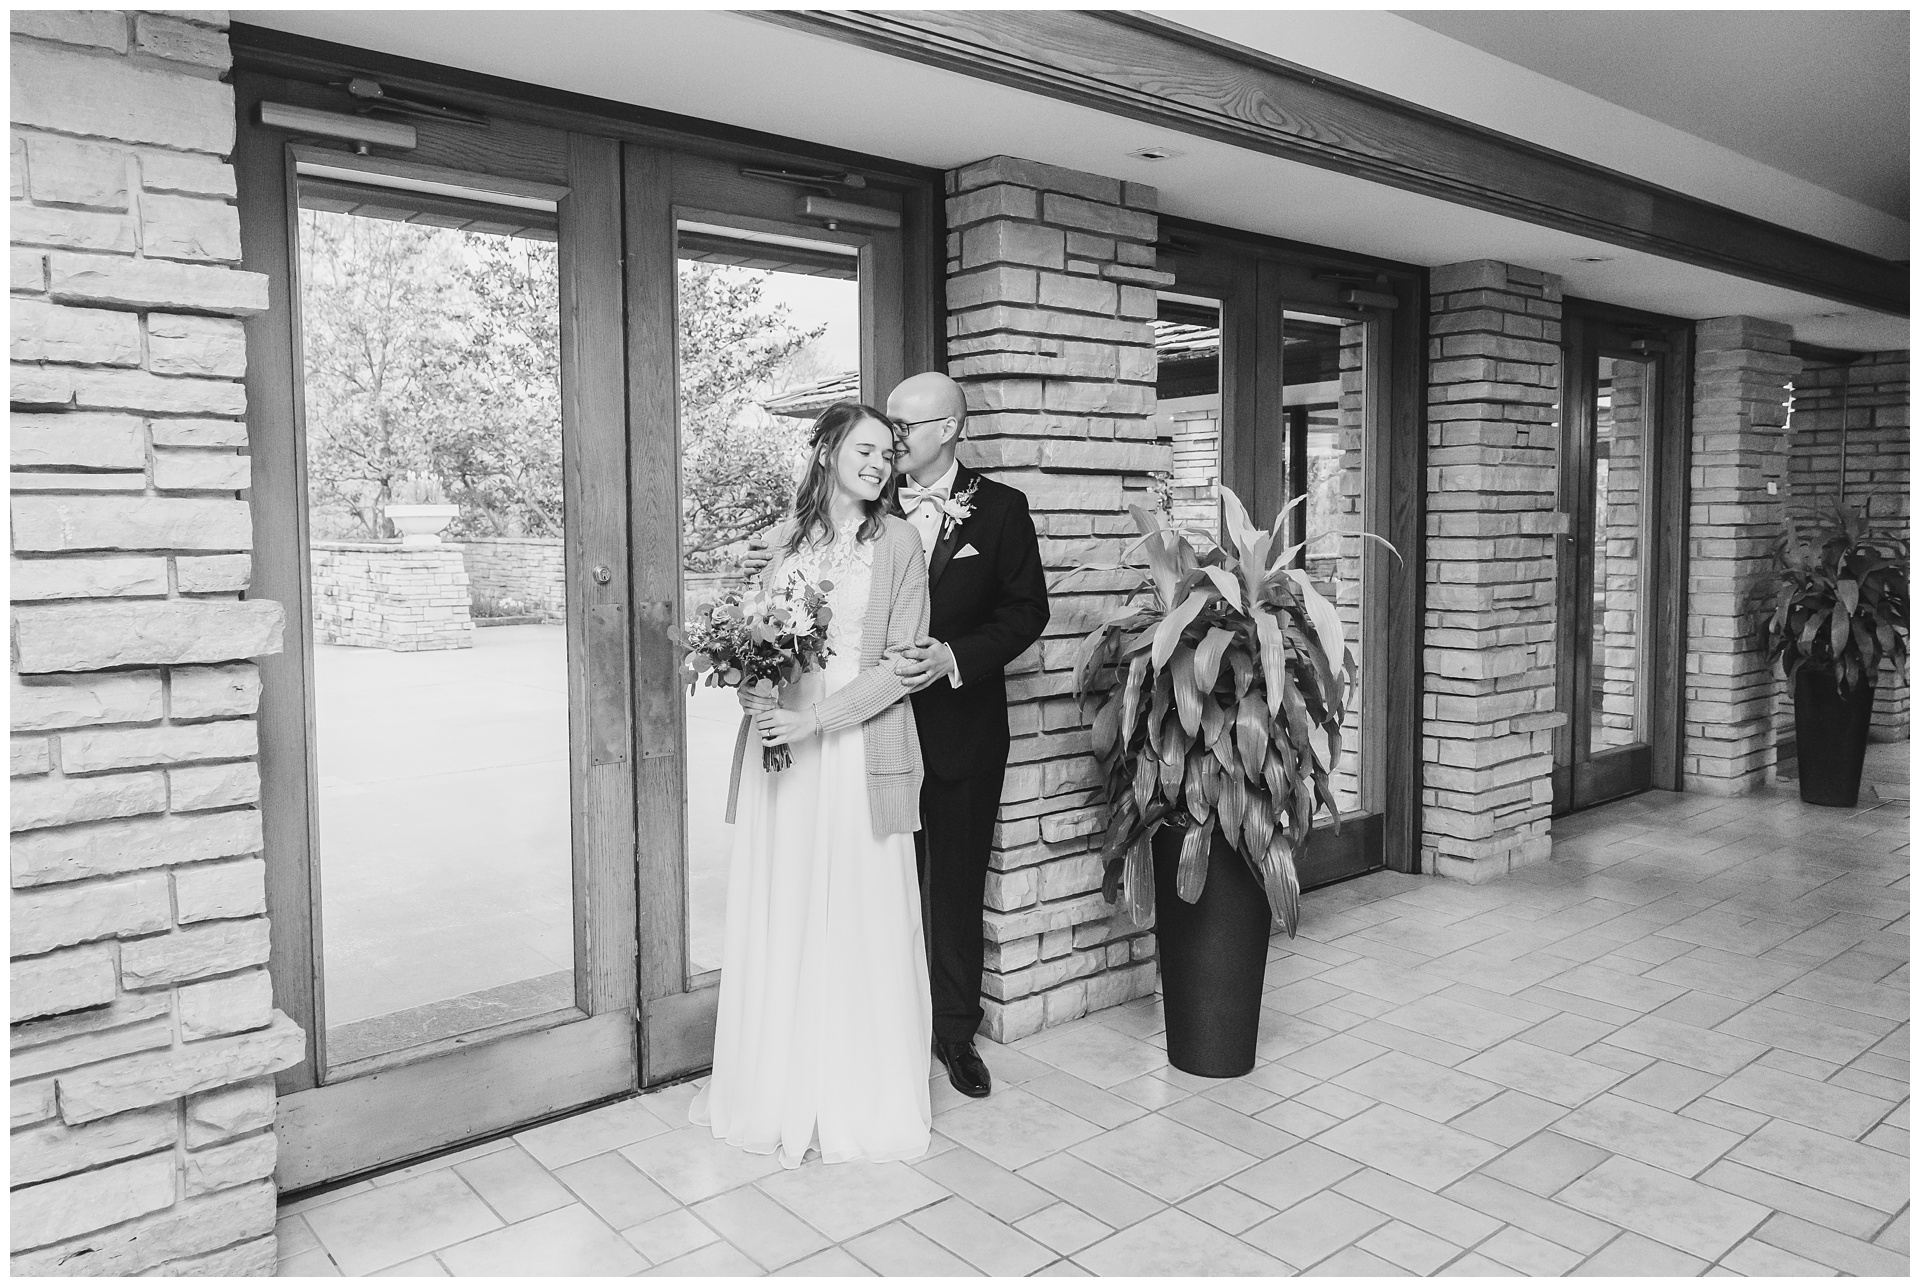 Wedding photography at Powell Gardens in Kingsville, Missouri, by Kansas City wedding photographers Wisdom-Watson Weddings.